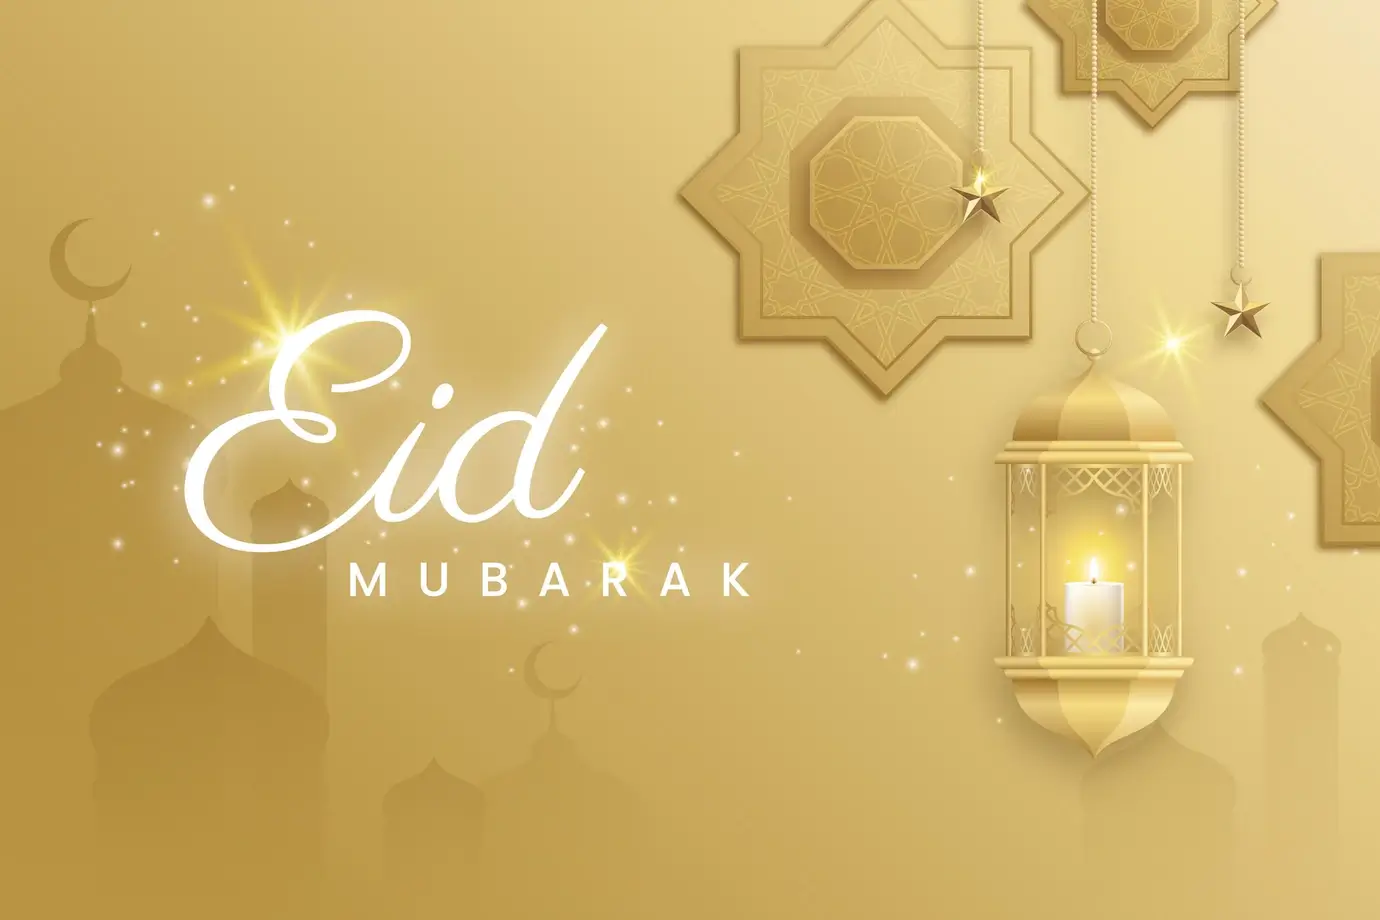 Eid Mubarak Messages for Family